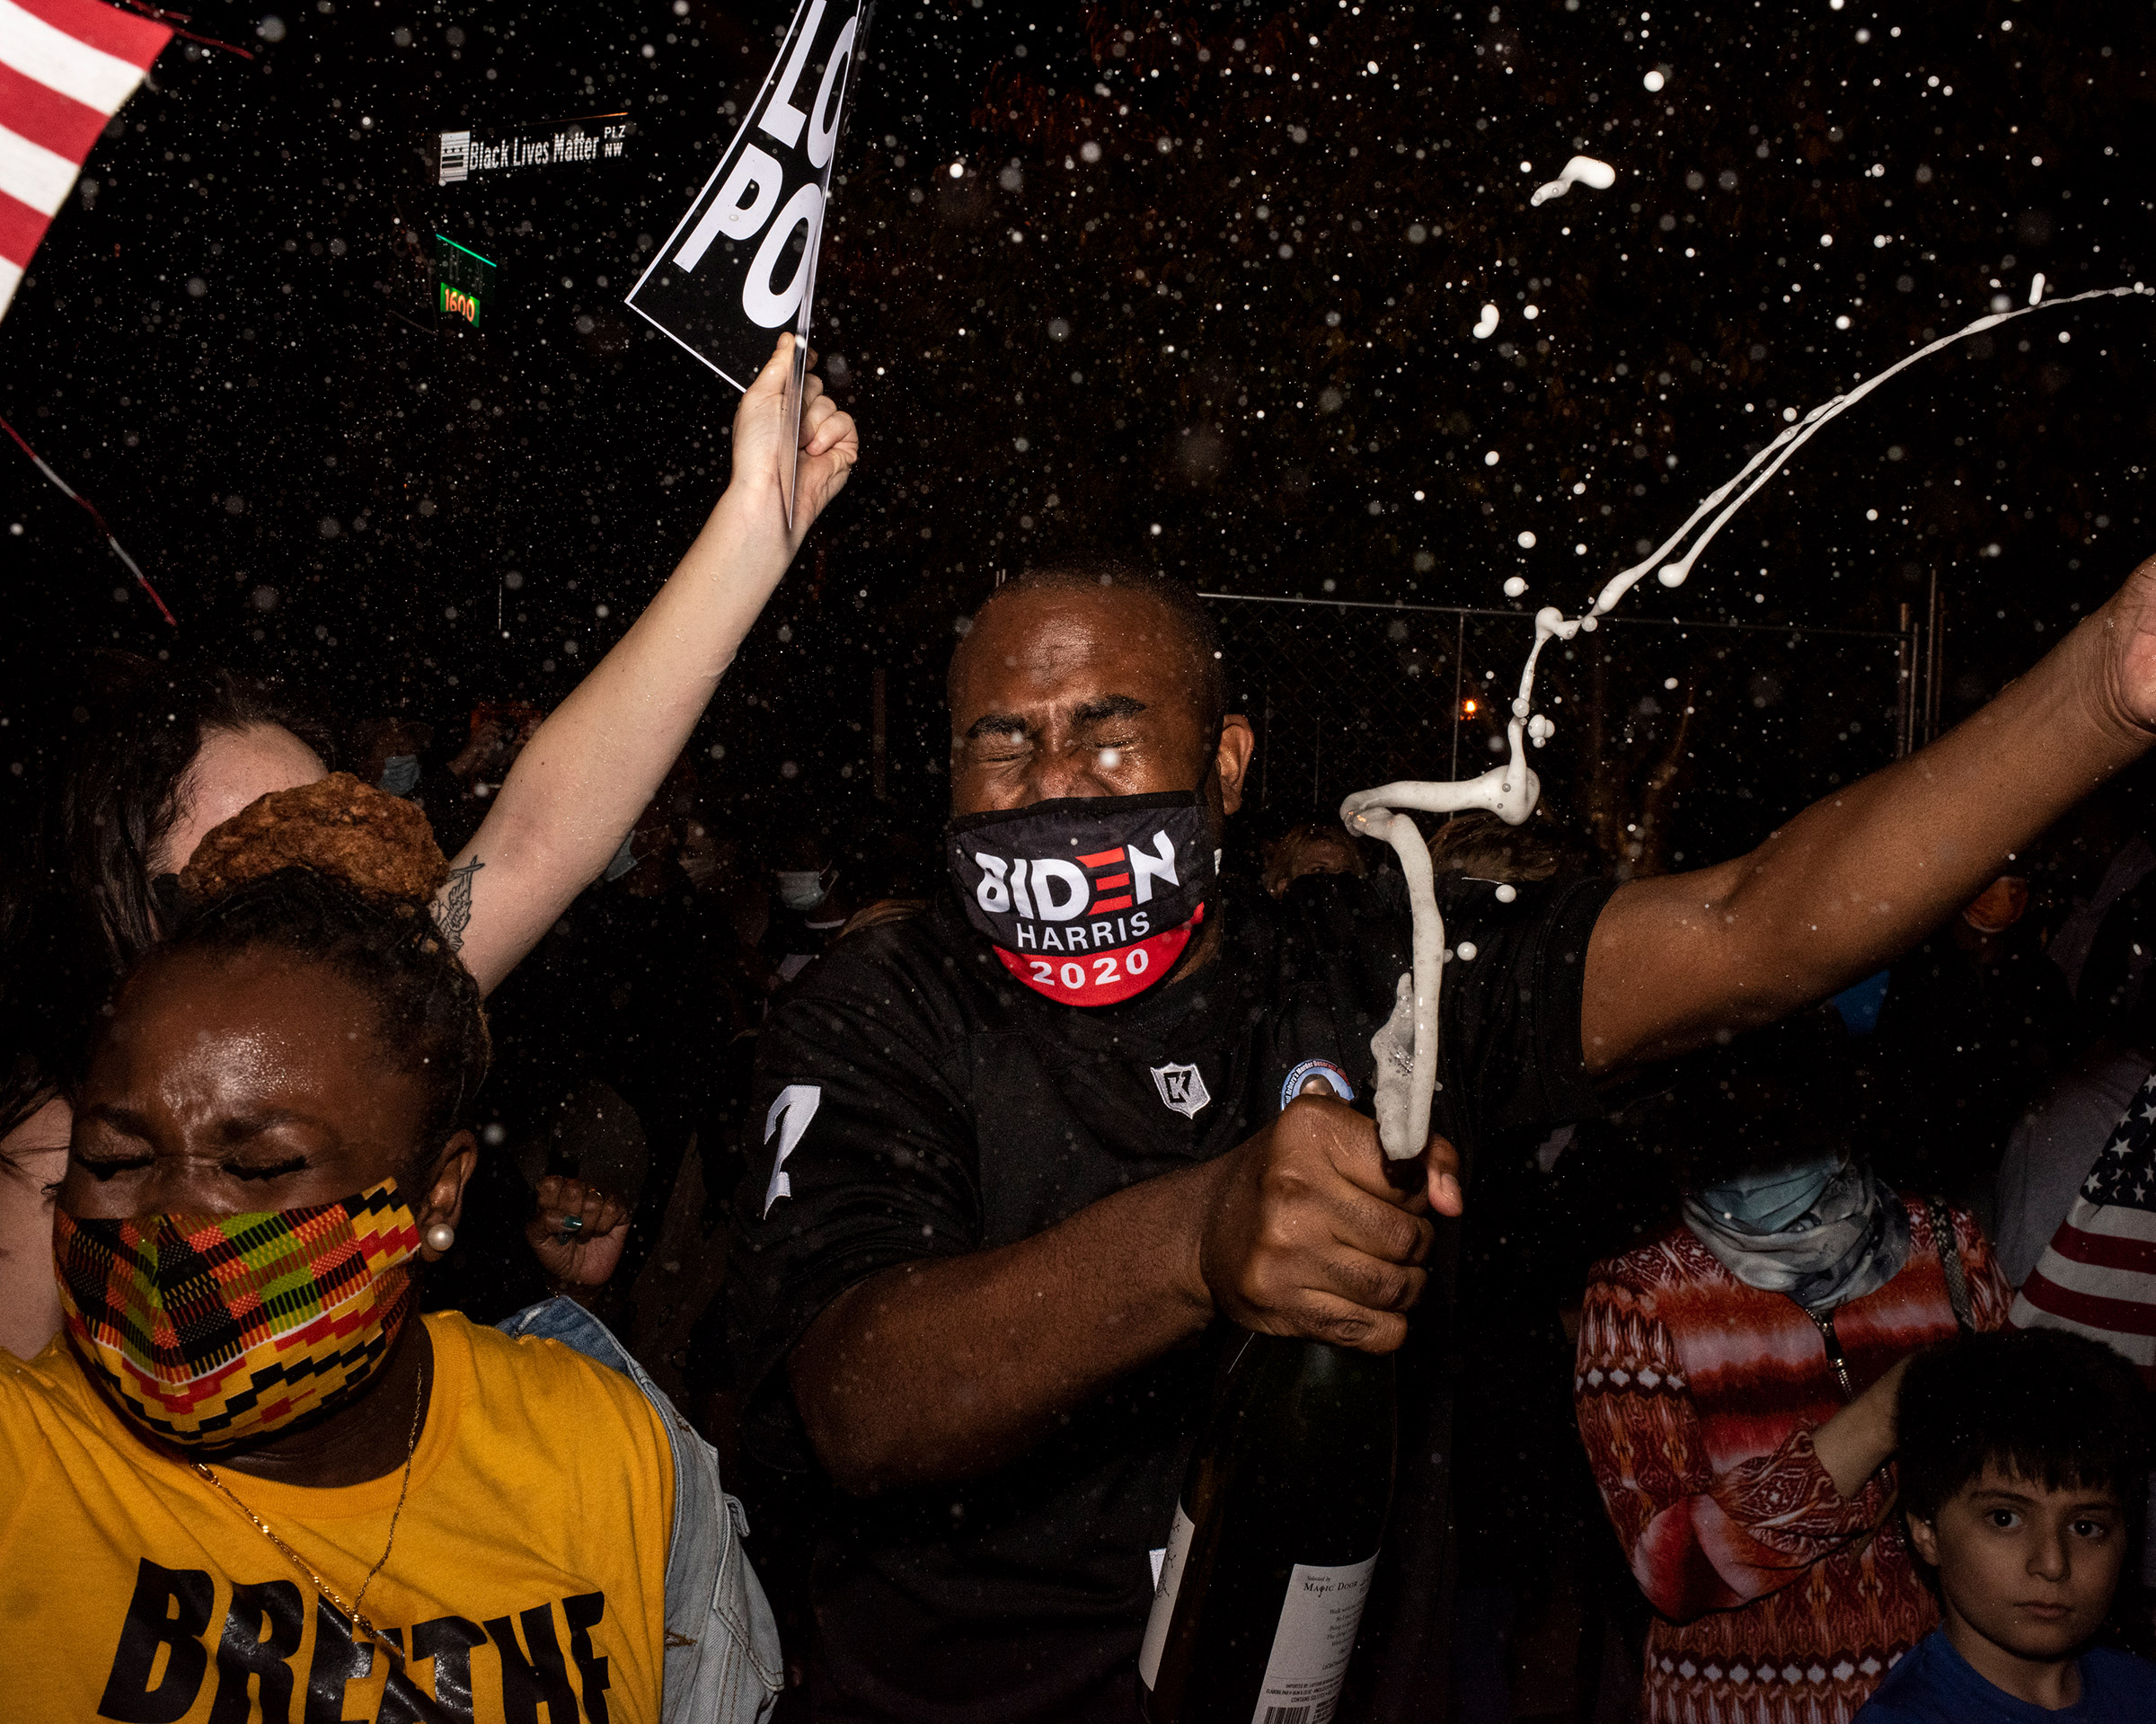 Biden-Harris supporters celebrate their win in Washington, D.C., on Nov. 7. (Lorenzo Meloni—Magnum Photos for TIME)